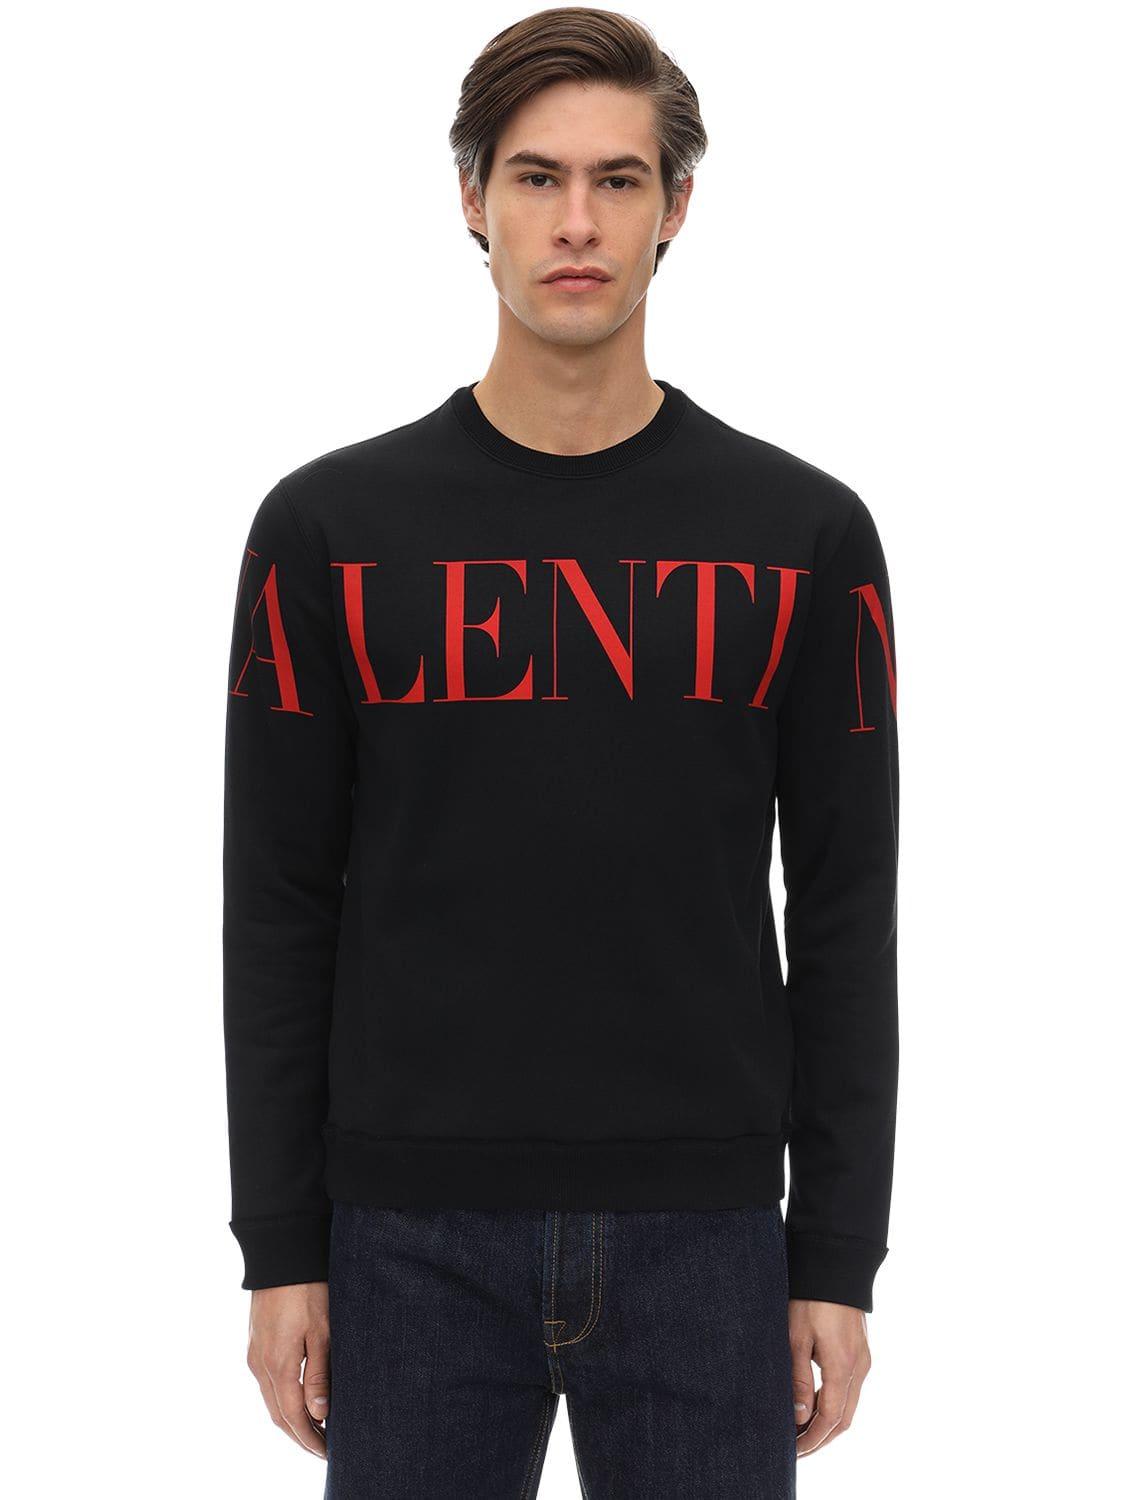 Valentino Printed Cotton Jersey Sweatshirt in Black for Men - Lyst